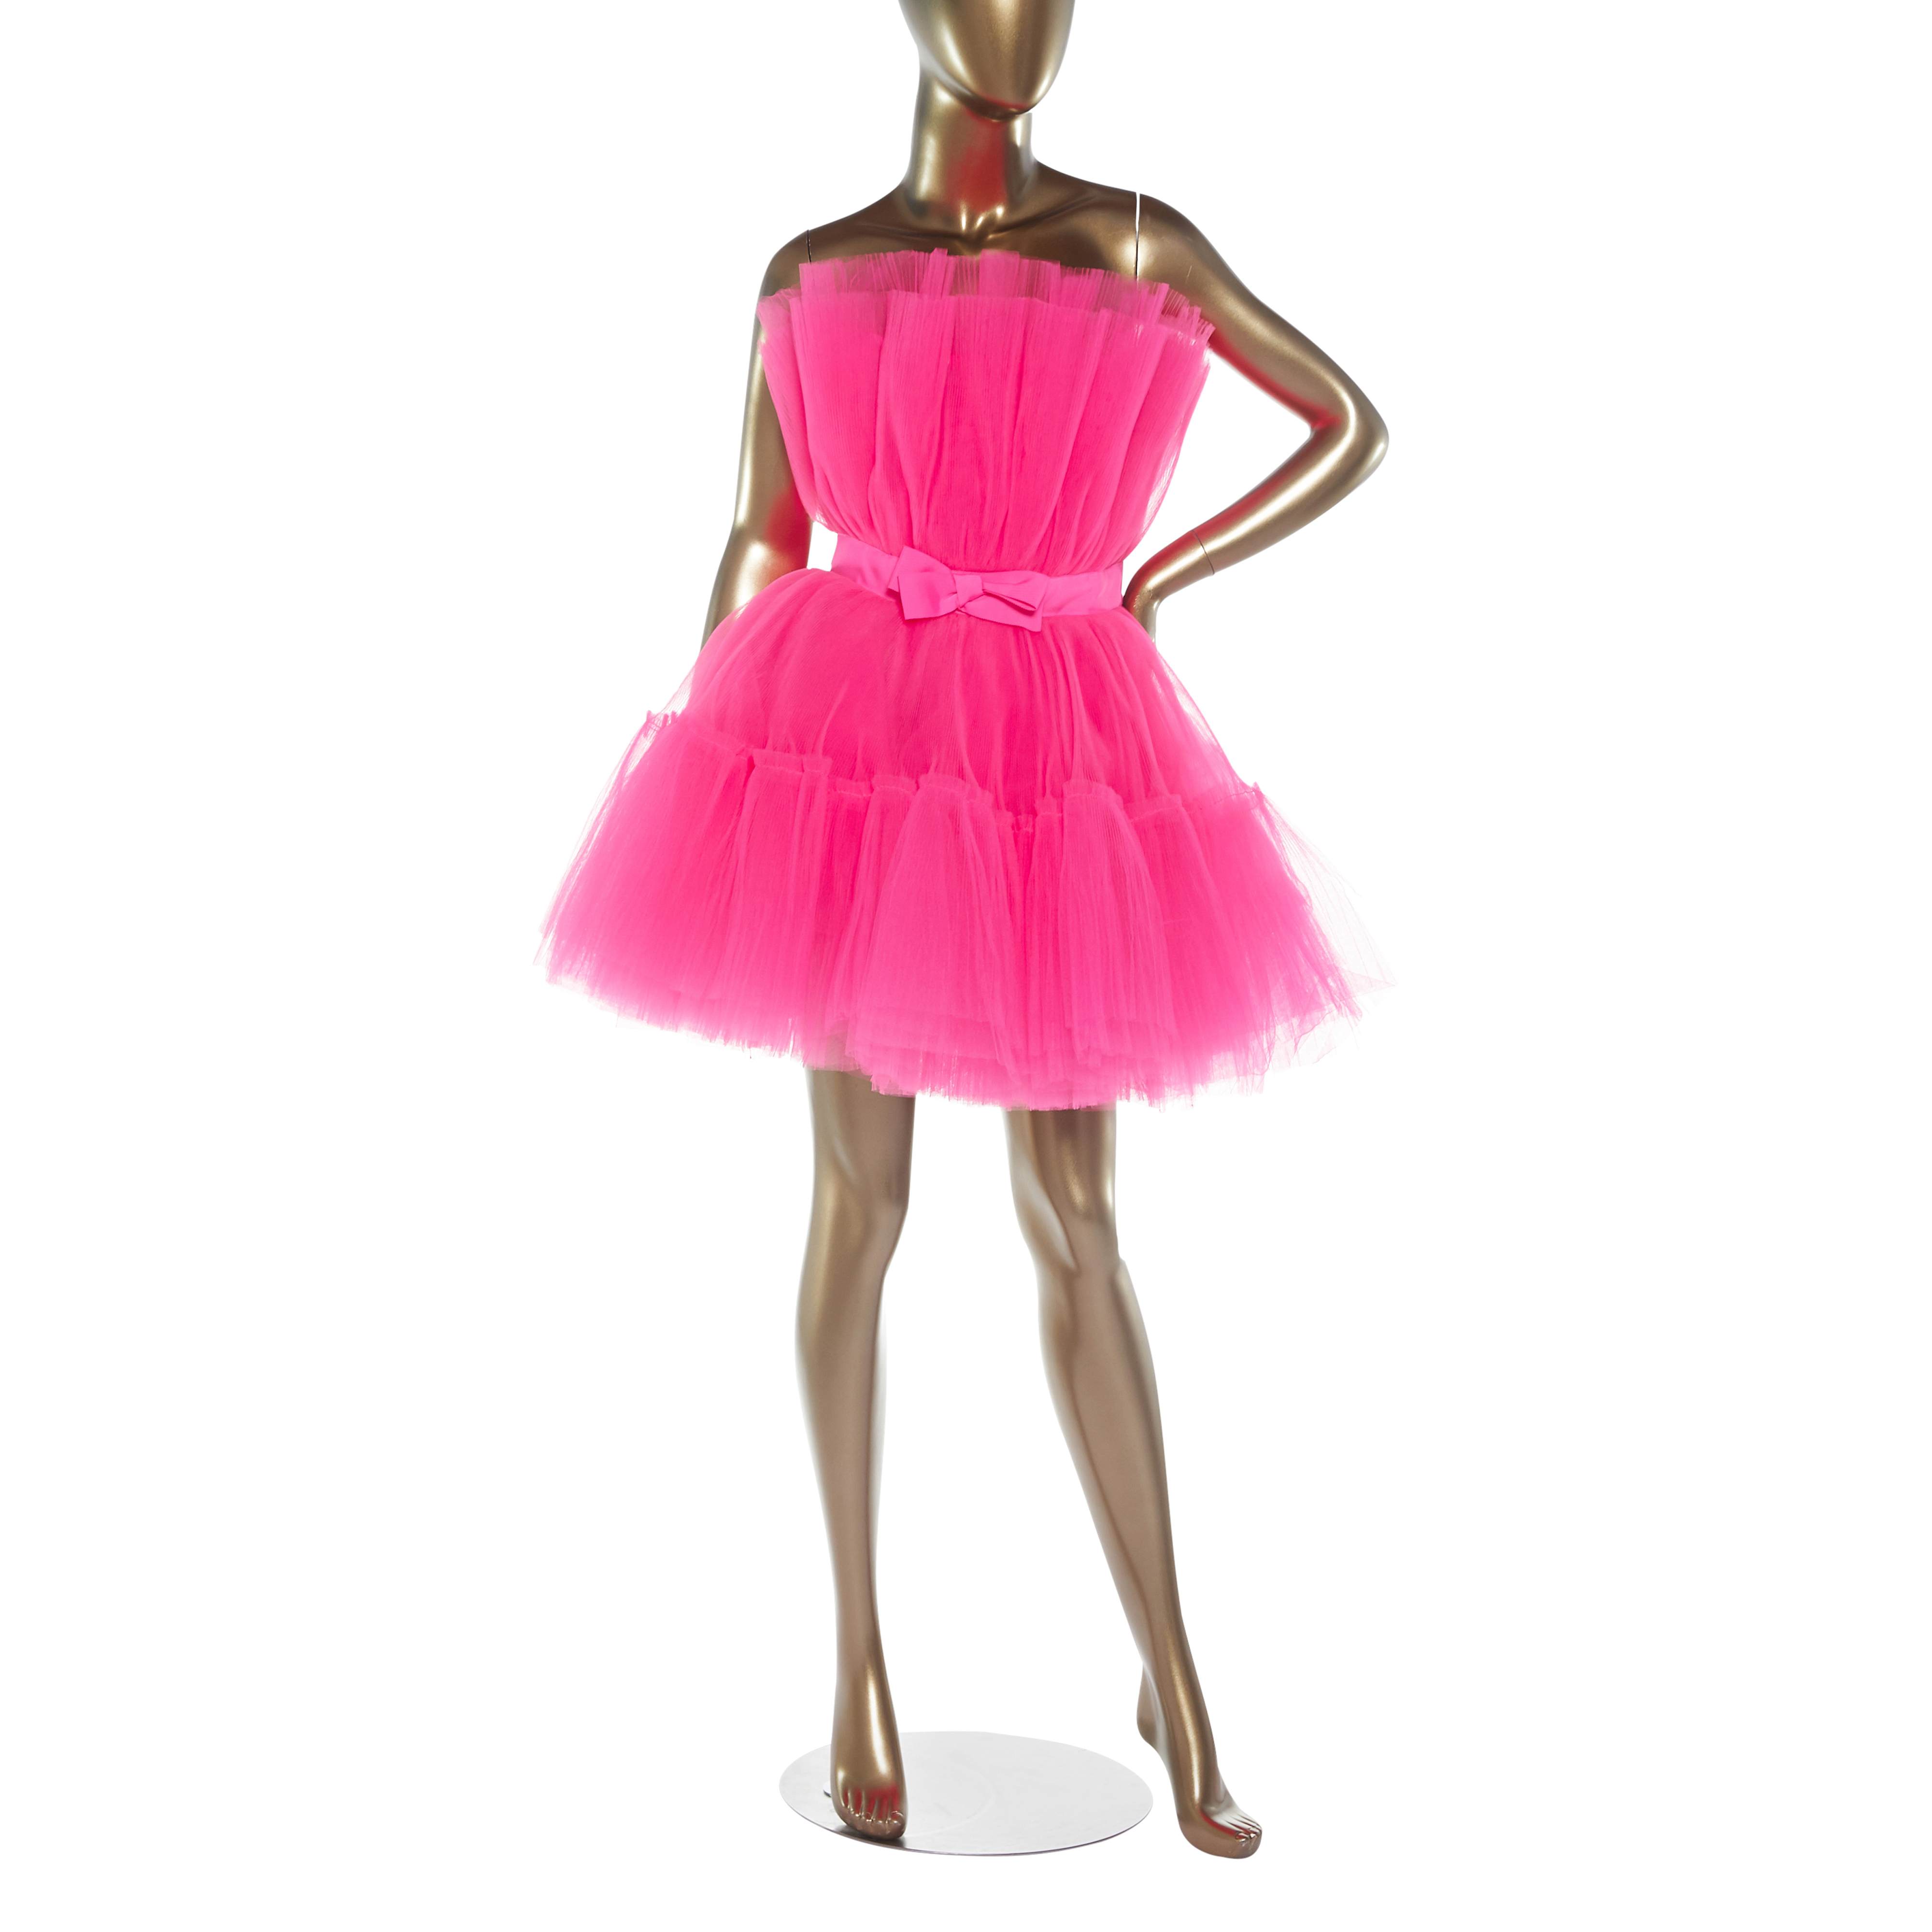 h&m pink tulle dress